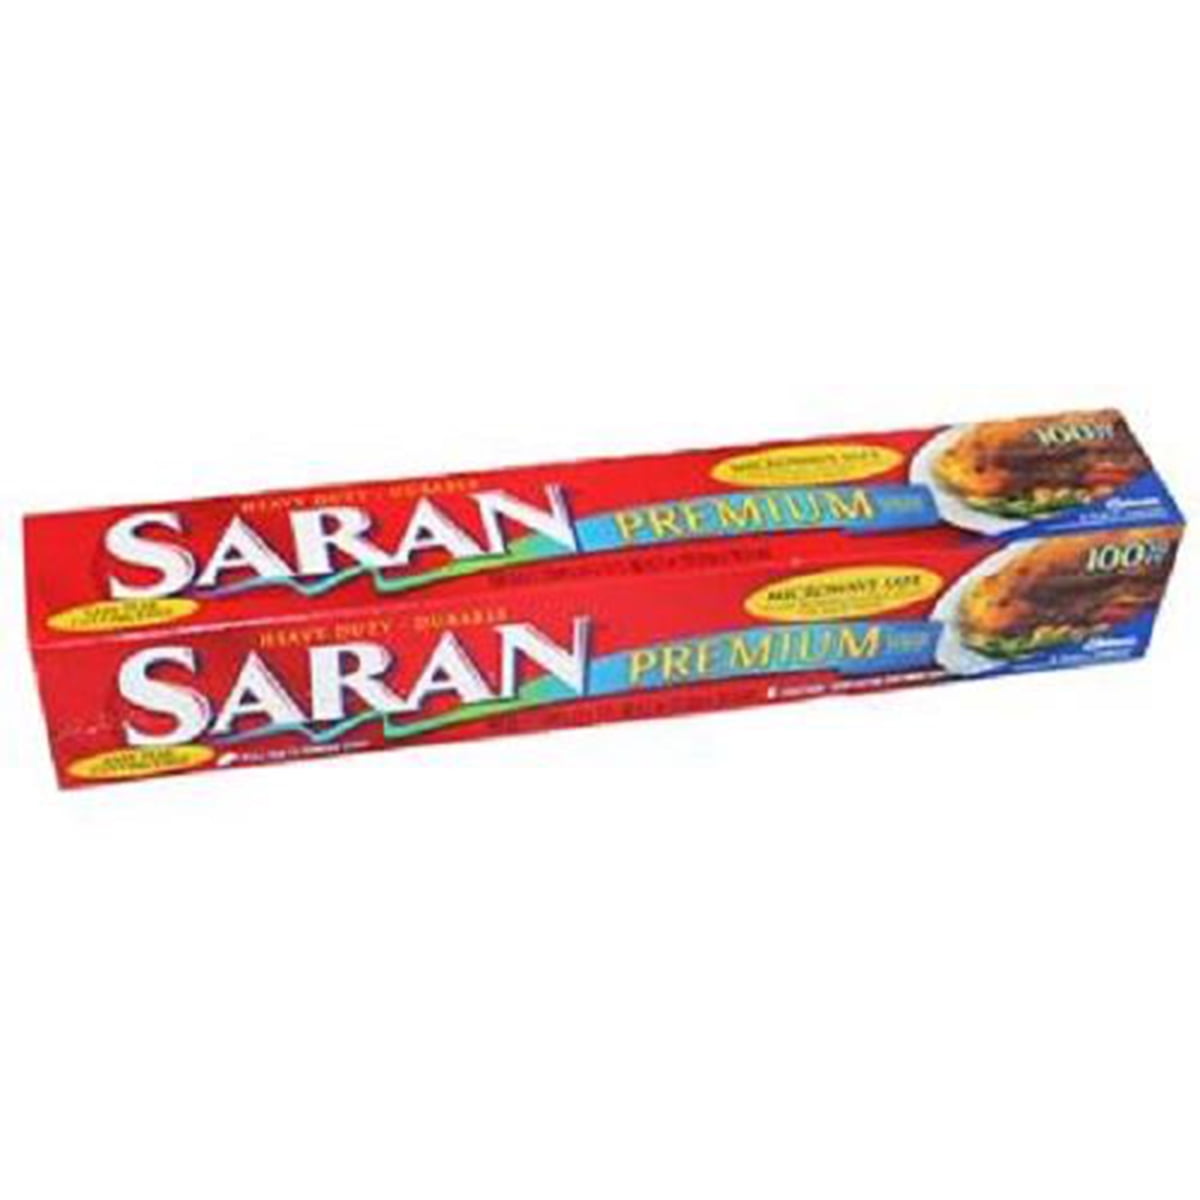 Saran Wrap Premium Heavy Duty Plastic Food Wrap